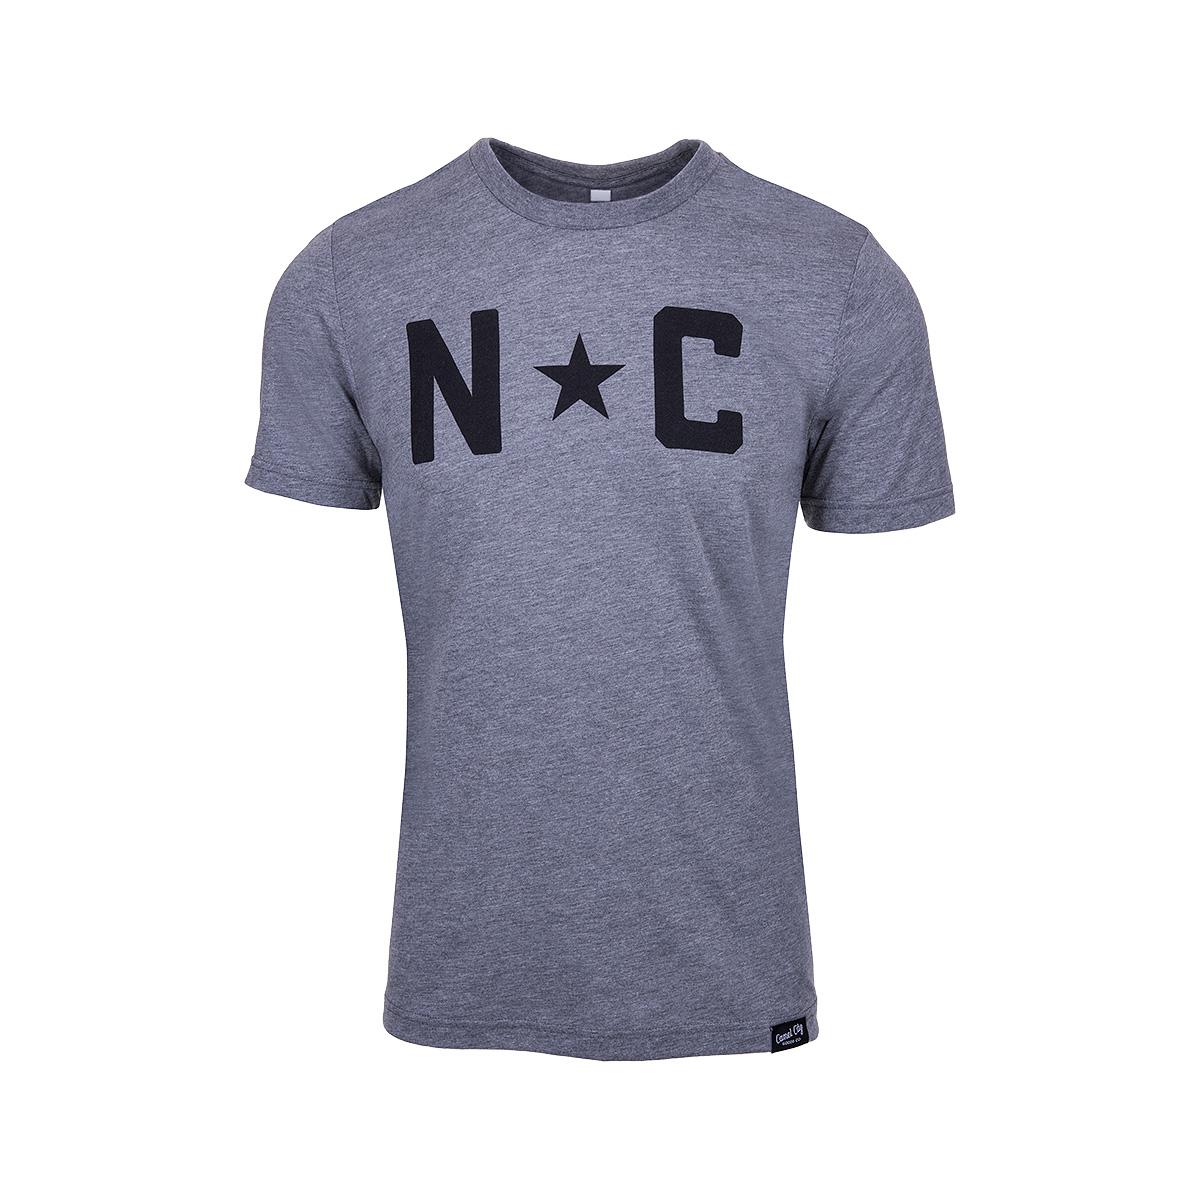  N Star C T- Shirt